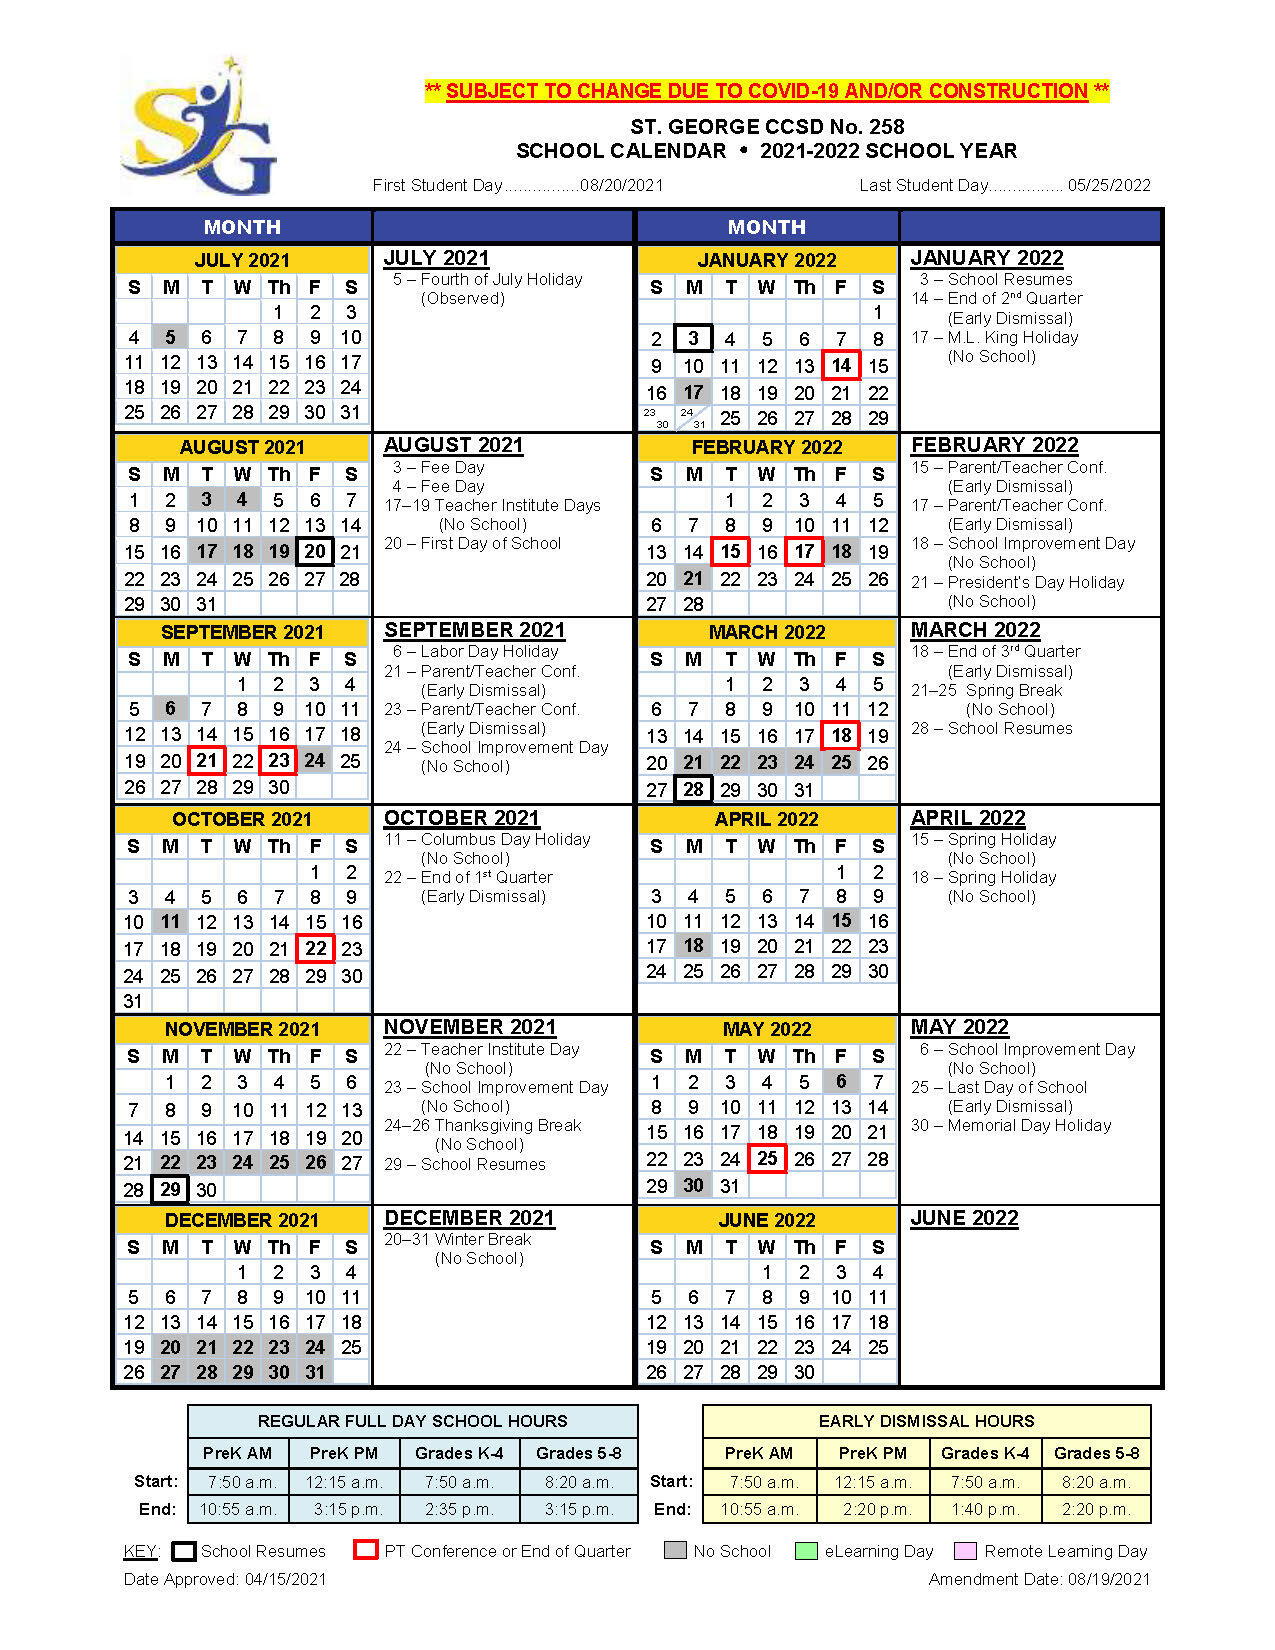 District Calendar 2020-2021